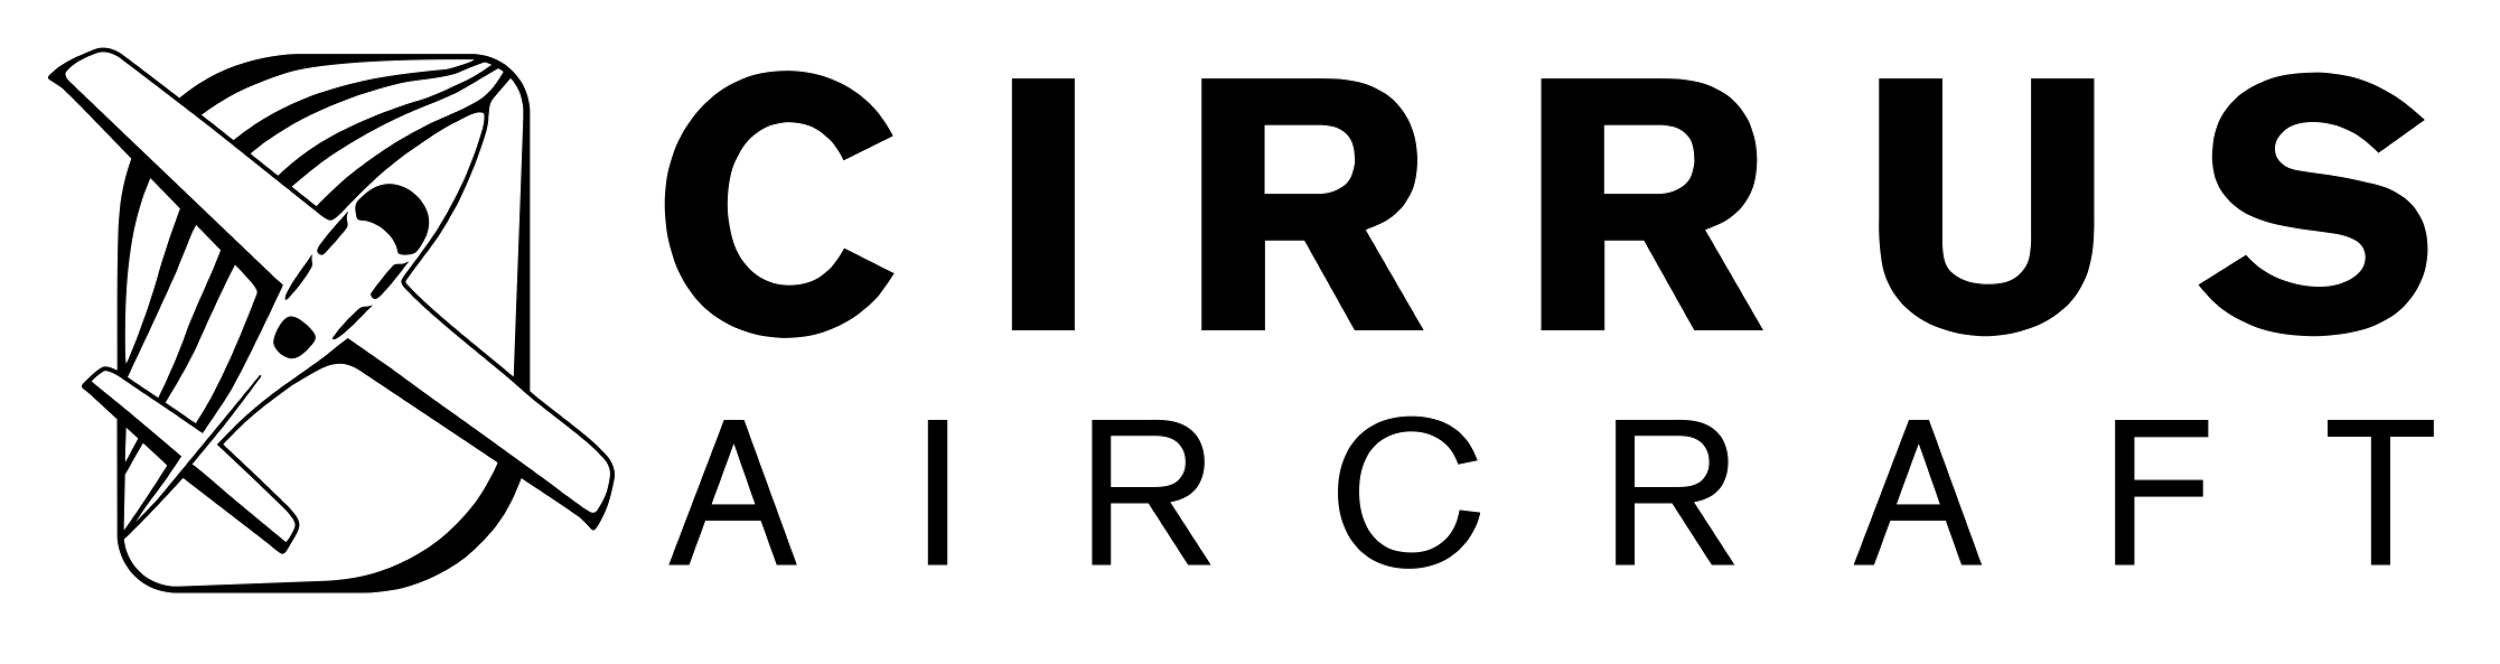 Cirrus_Aircraft_logo-2747b20923b81594aa82a632c447e624.png